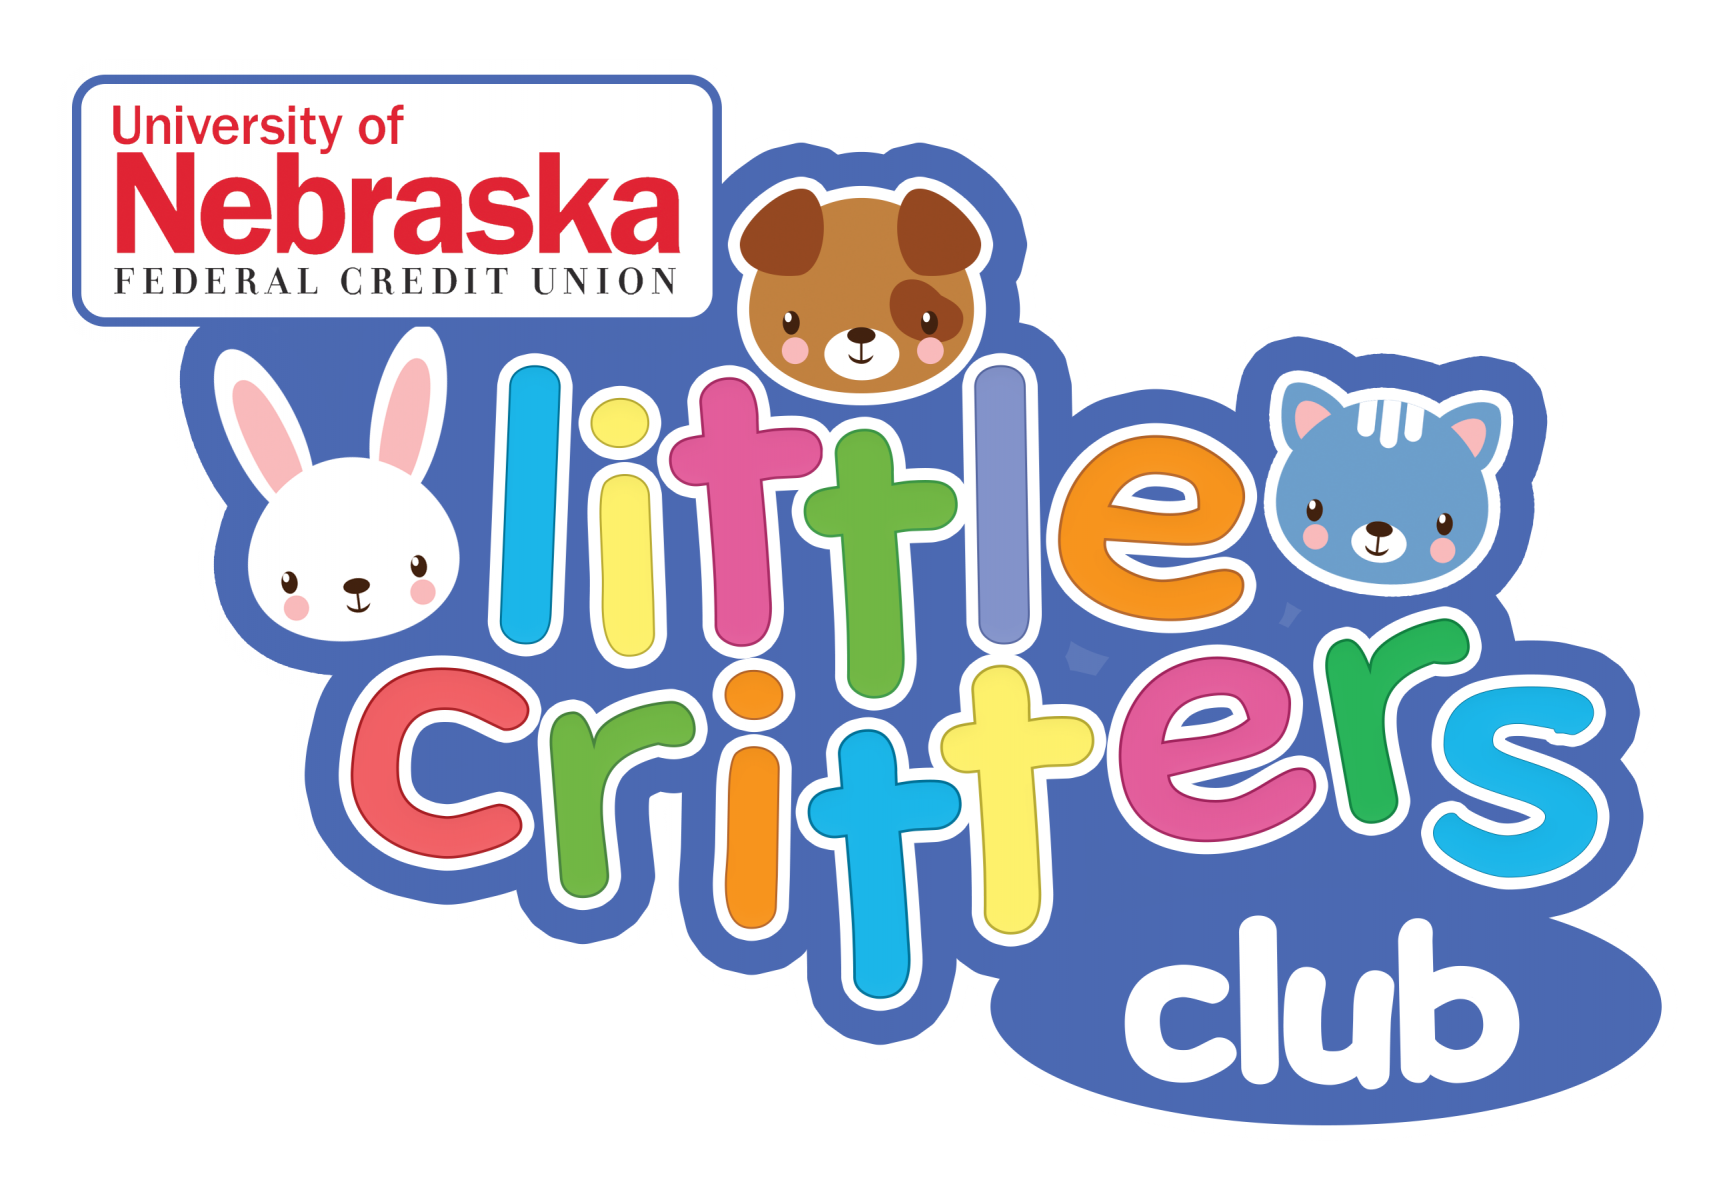 CrittersClub